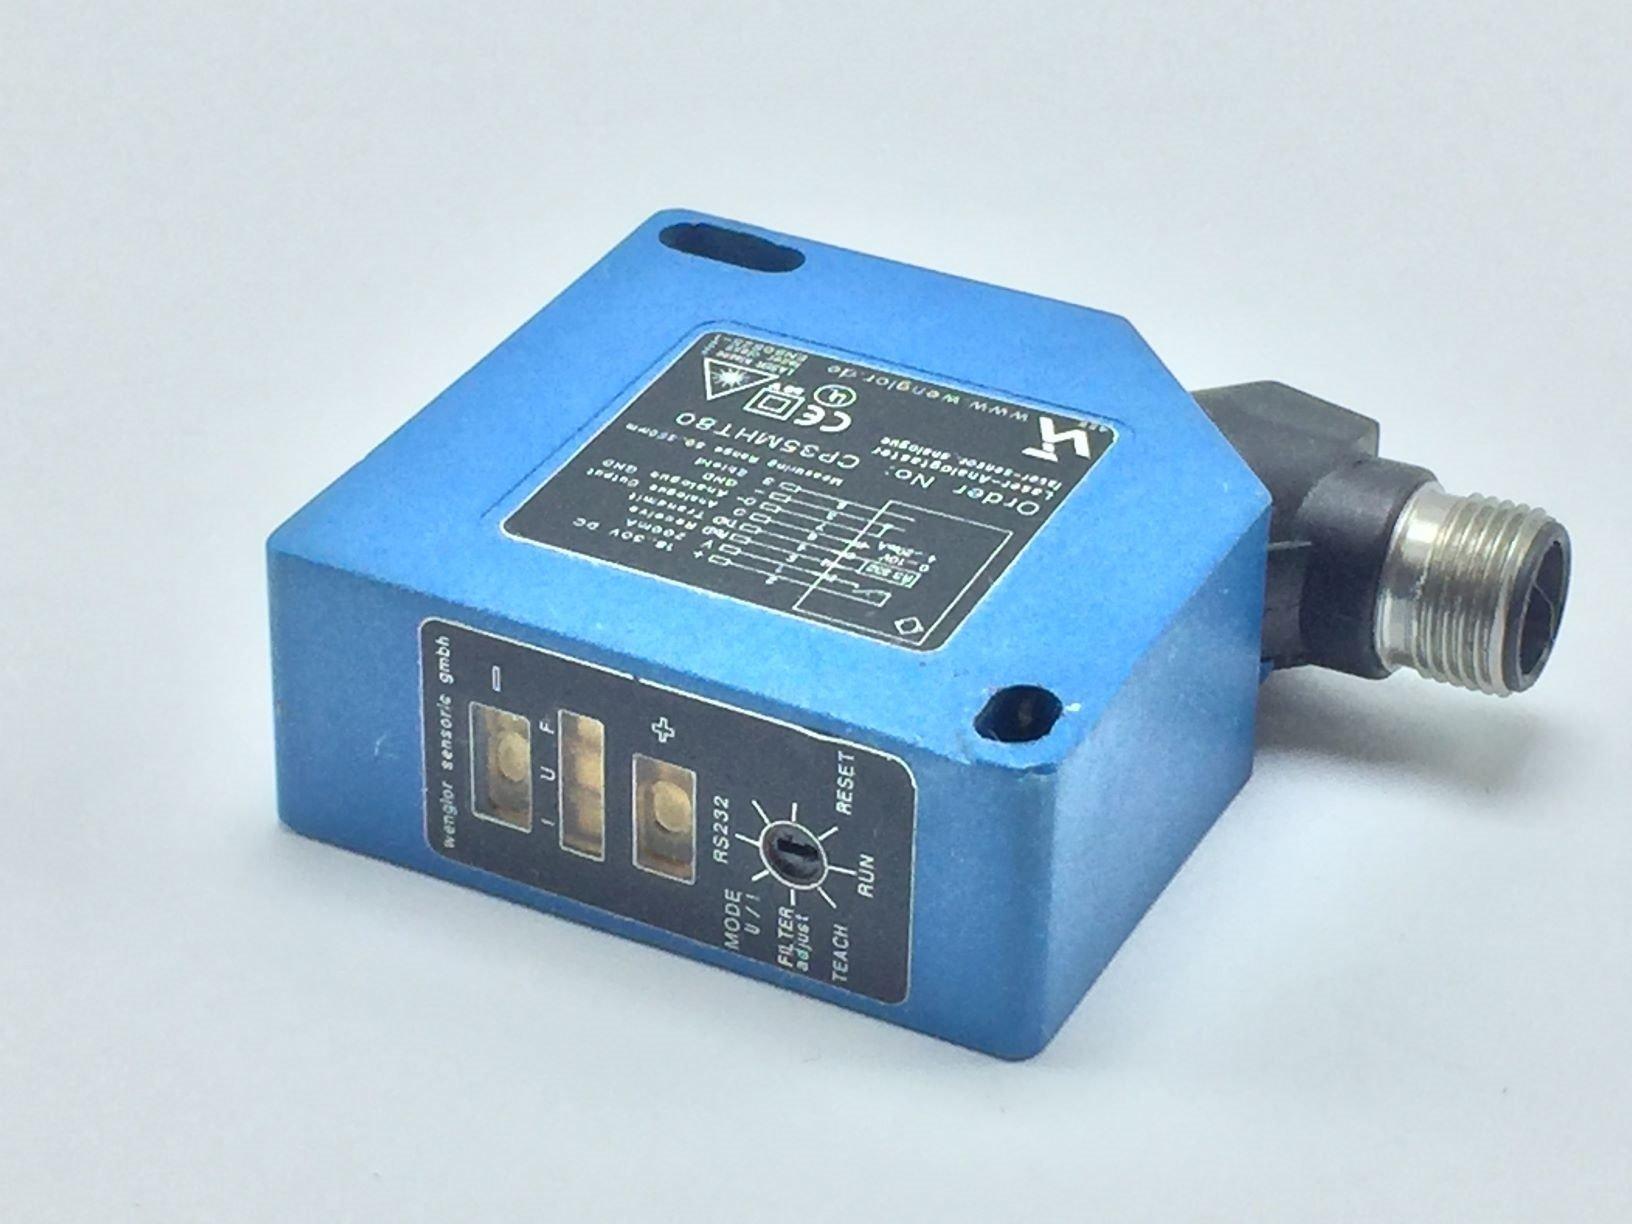 Wenglor CP35MHT80 Photoelectric Laser Sensor TESTED 